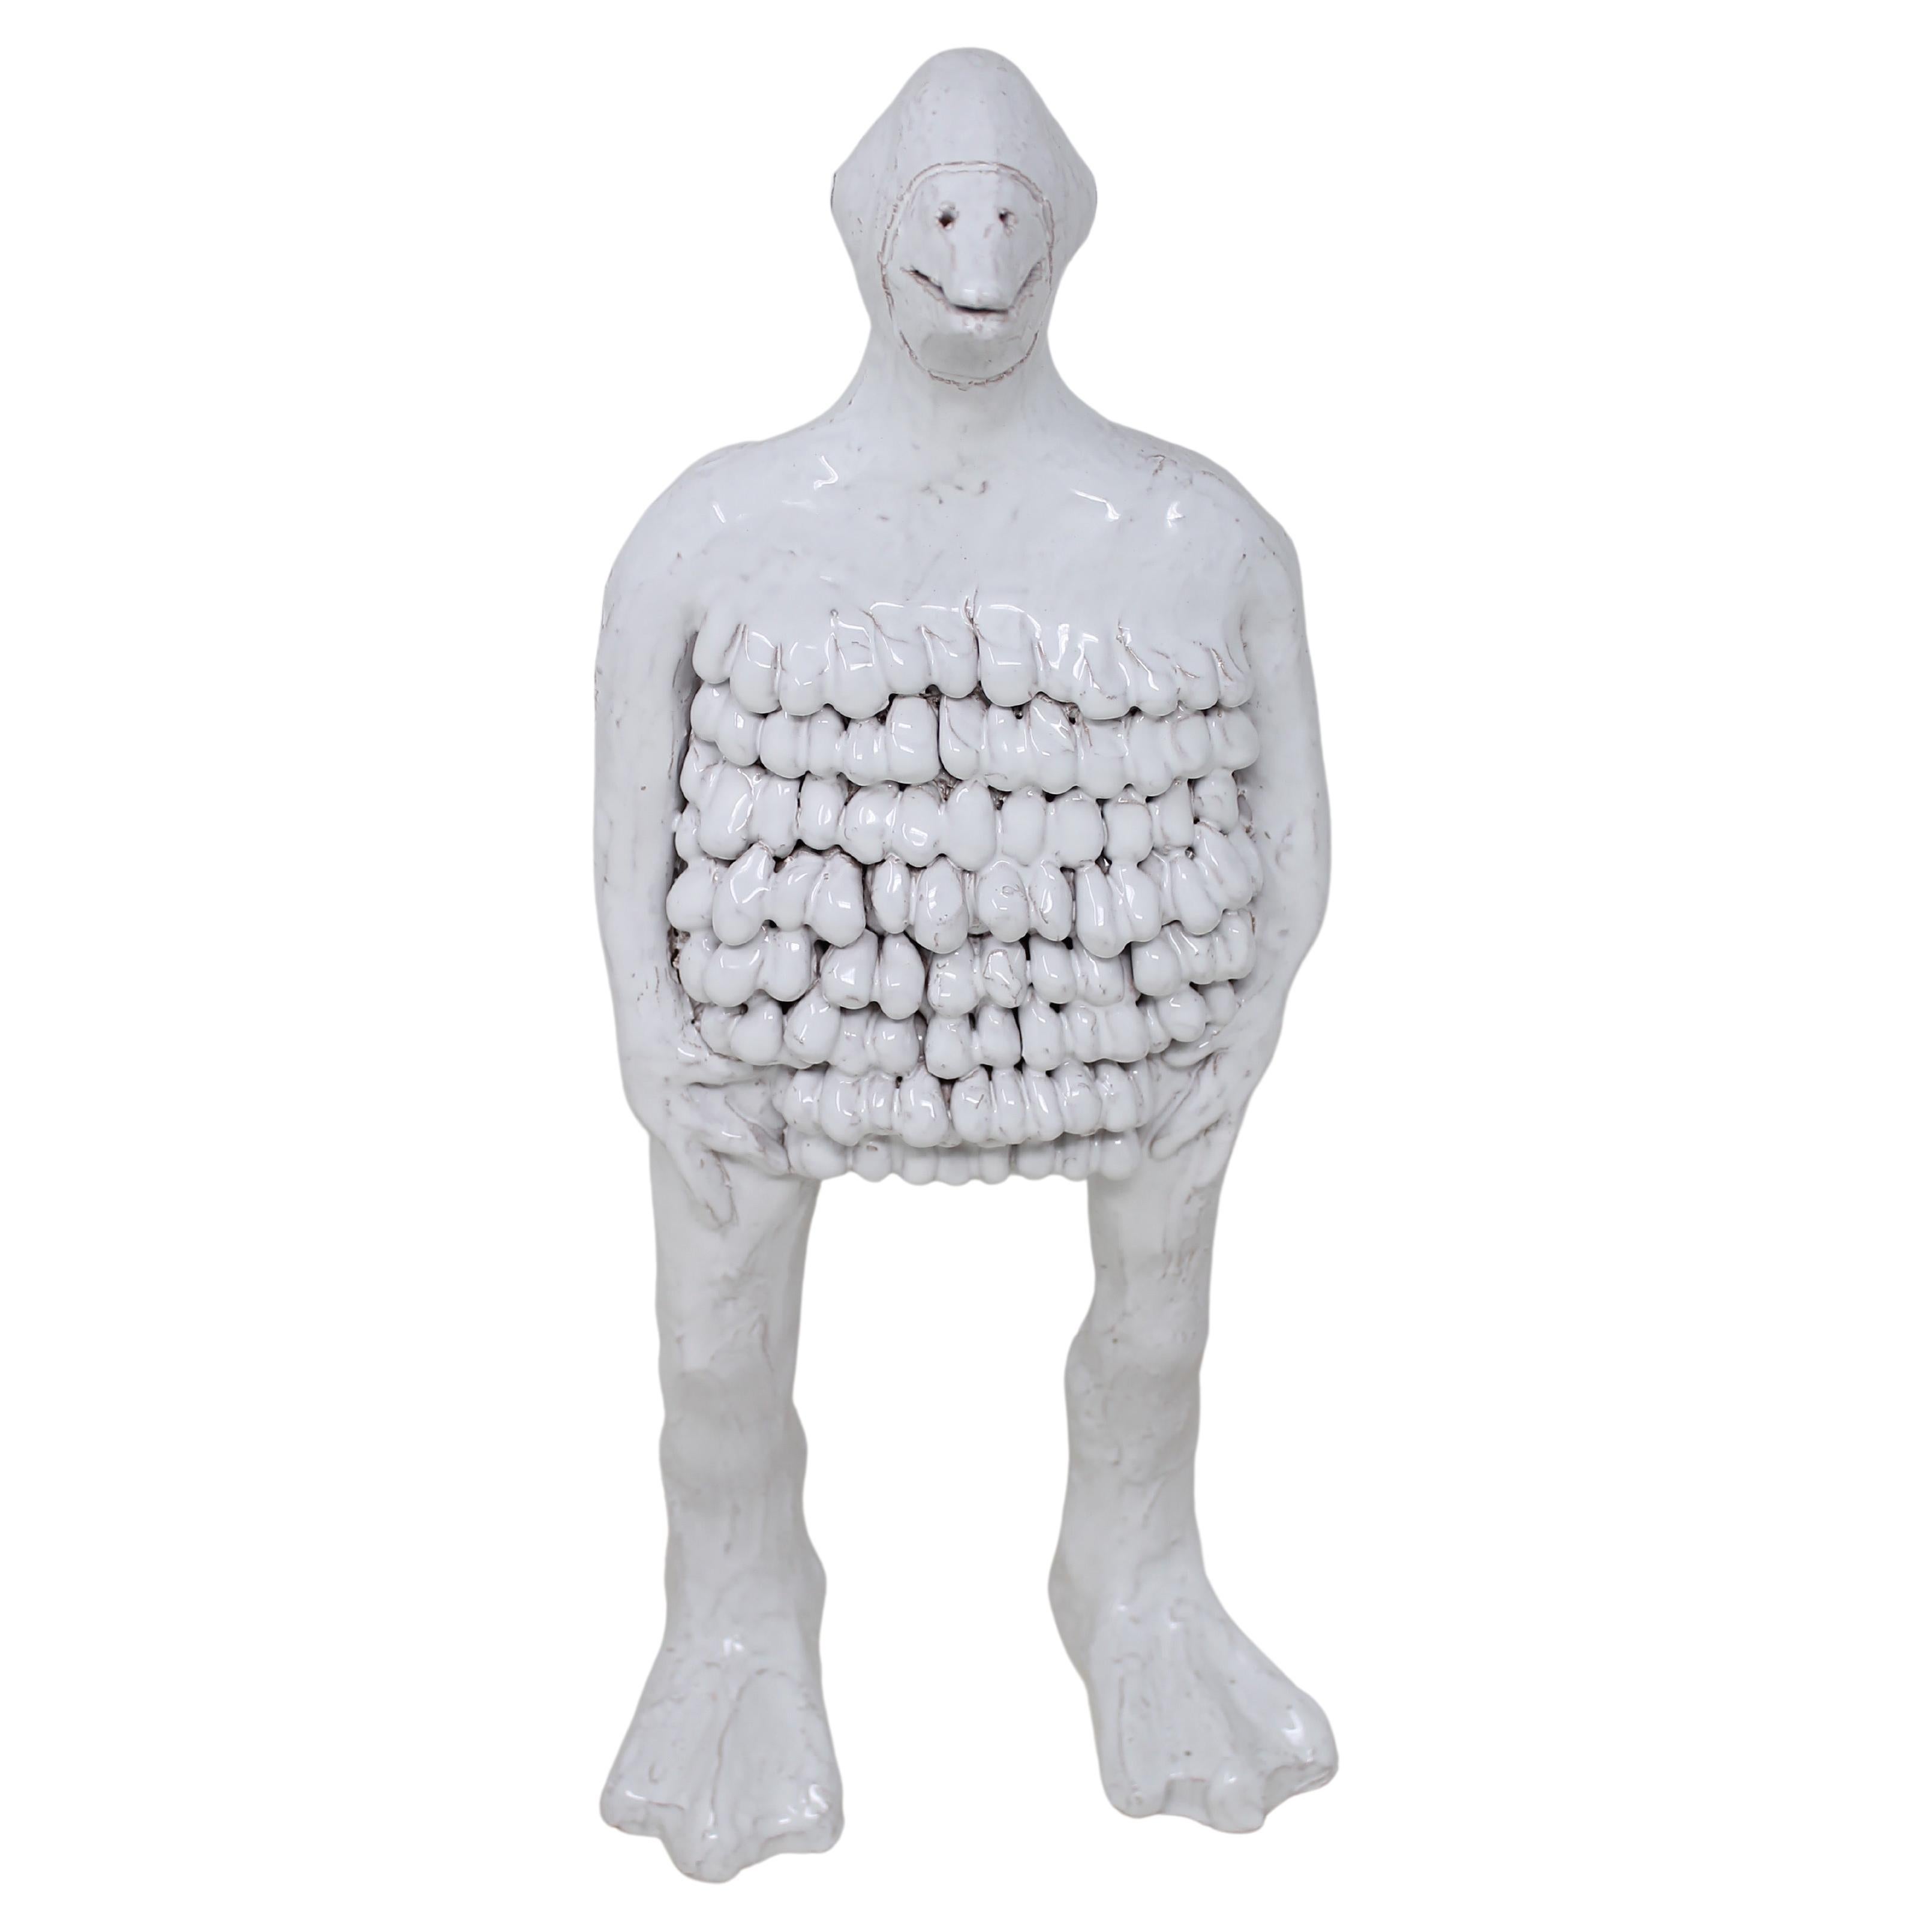 Freaklab - « Big Humans Made Entirely by Hand in Ceramic » - Oiseau homme-femme